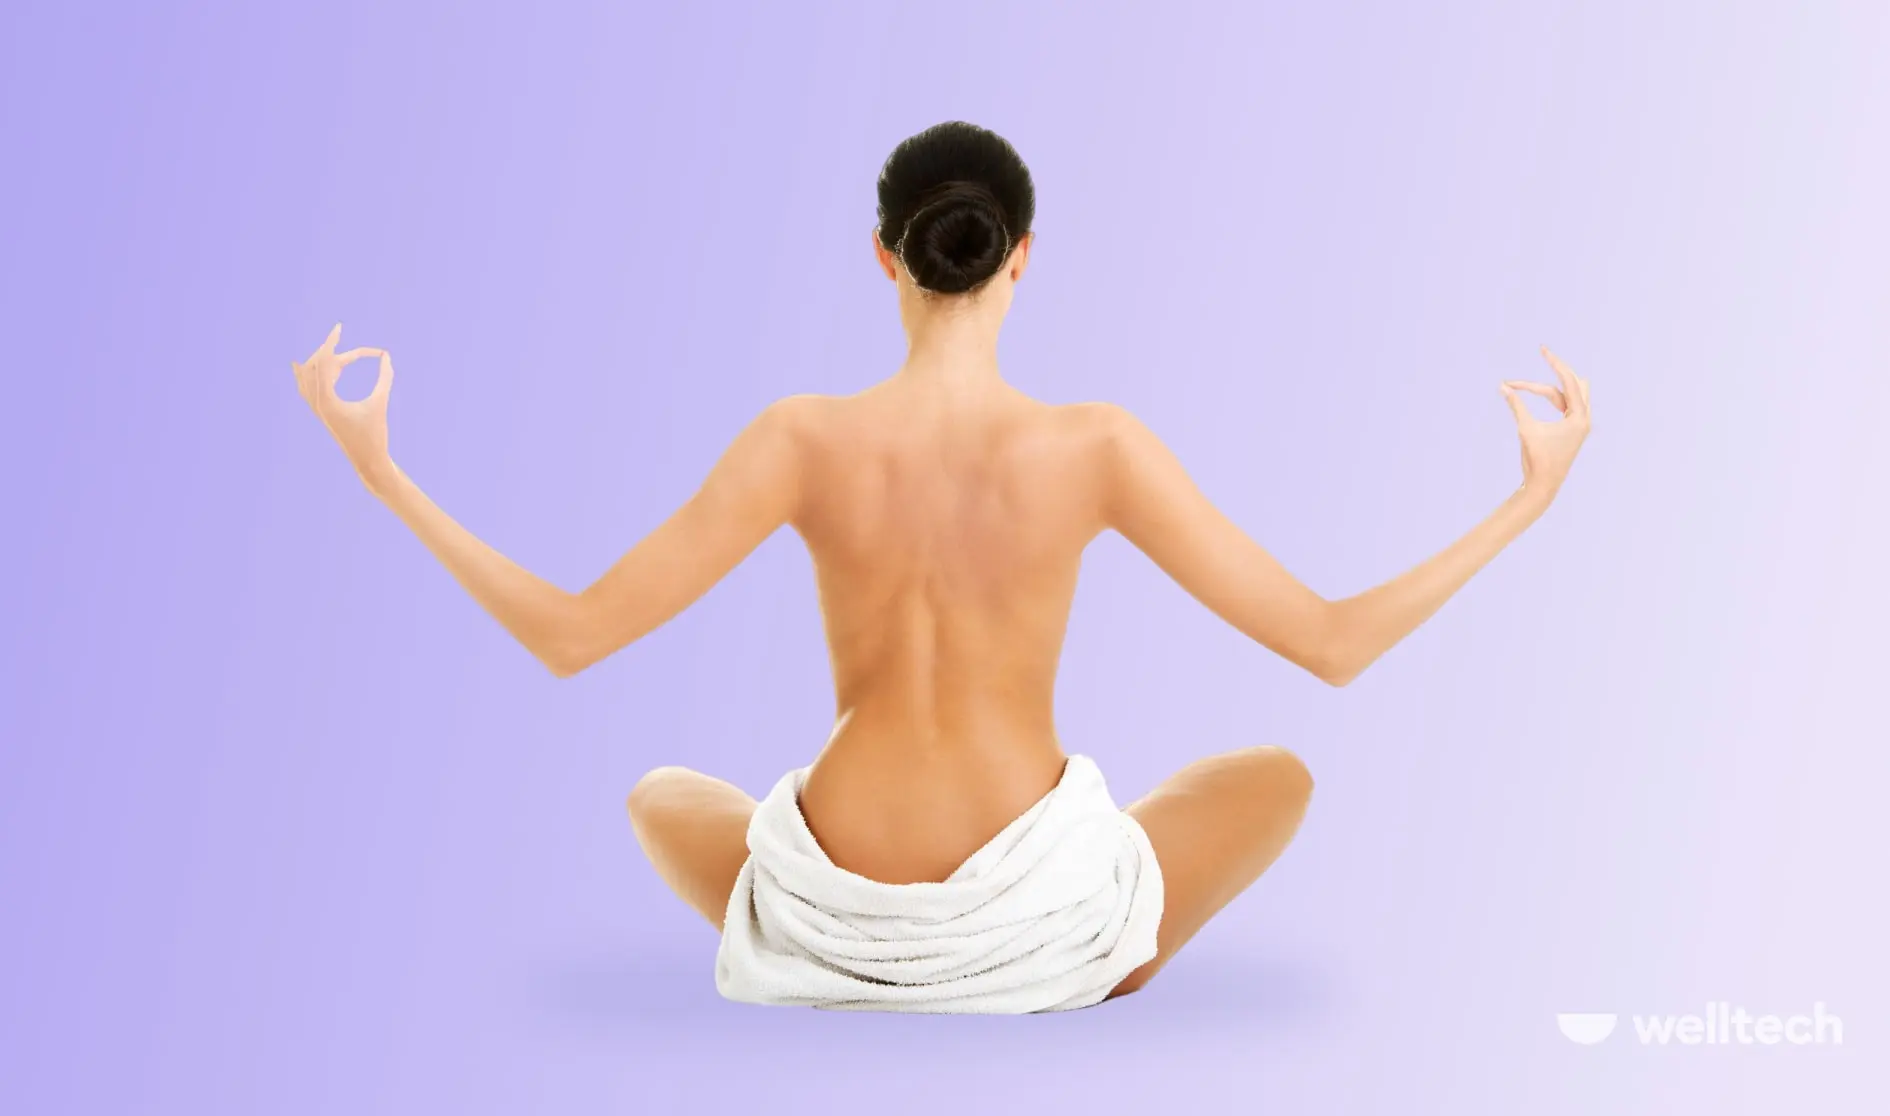 naked yoga benefits - Does yoga suit everyone